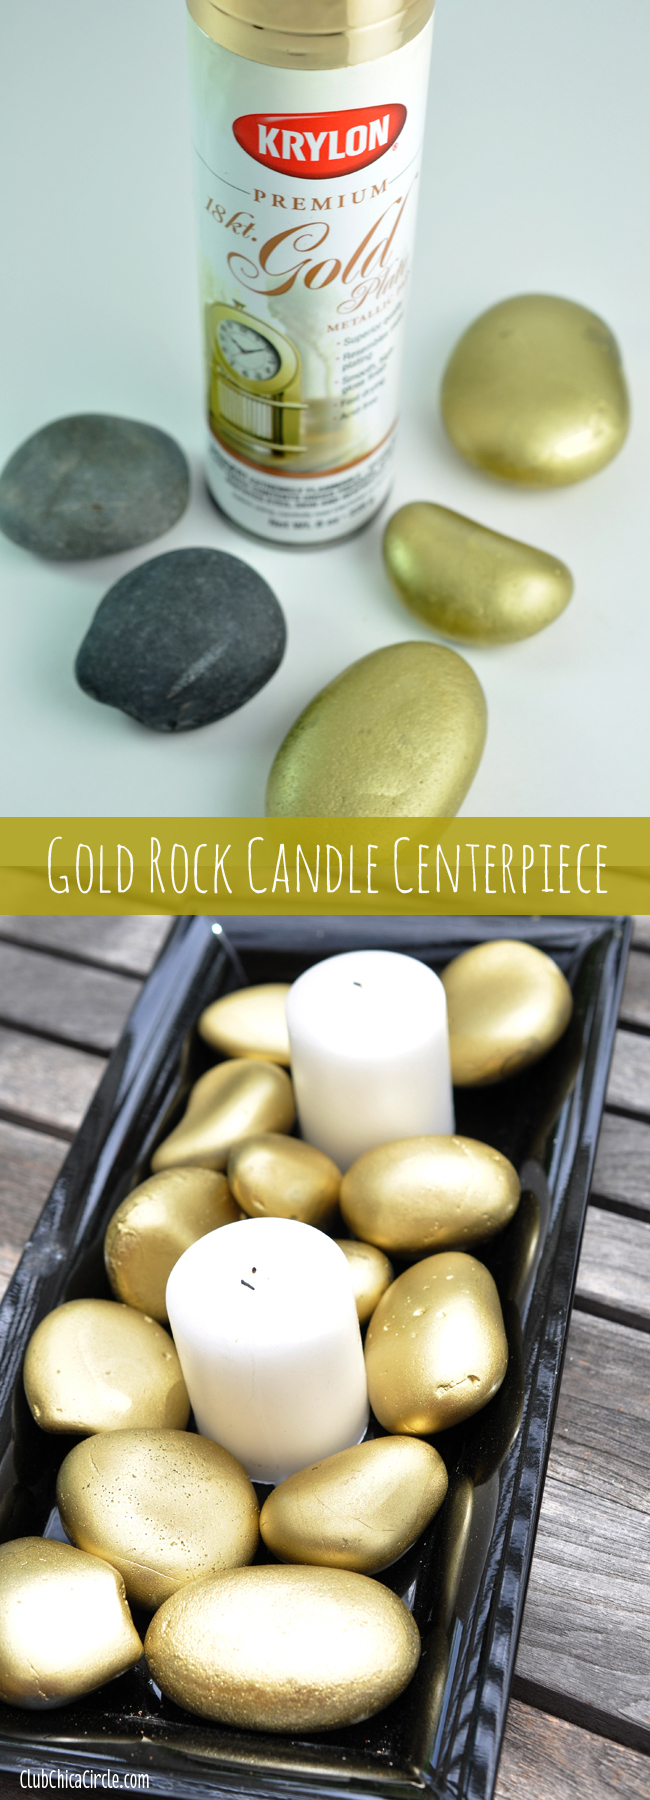 Gold Rock Candle Centerpiece easy craft idea